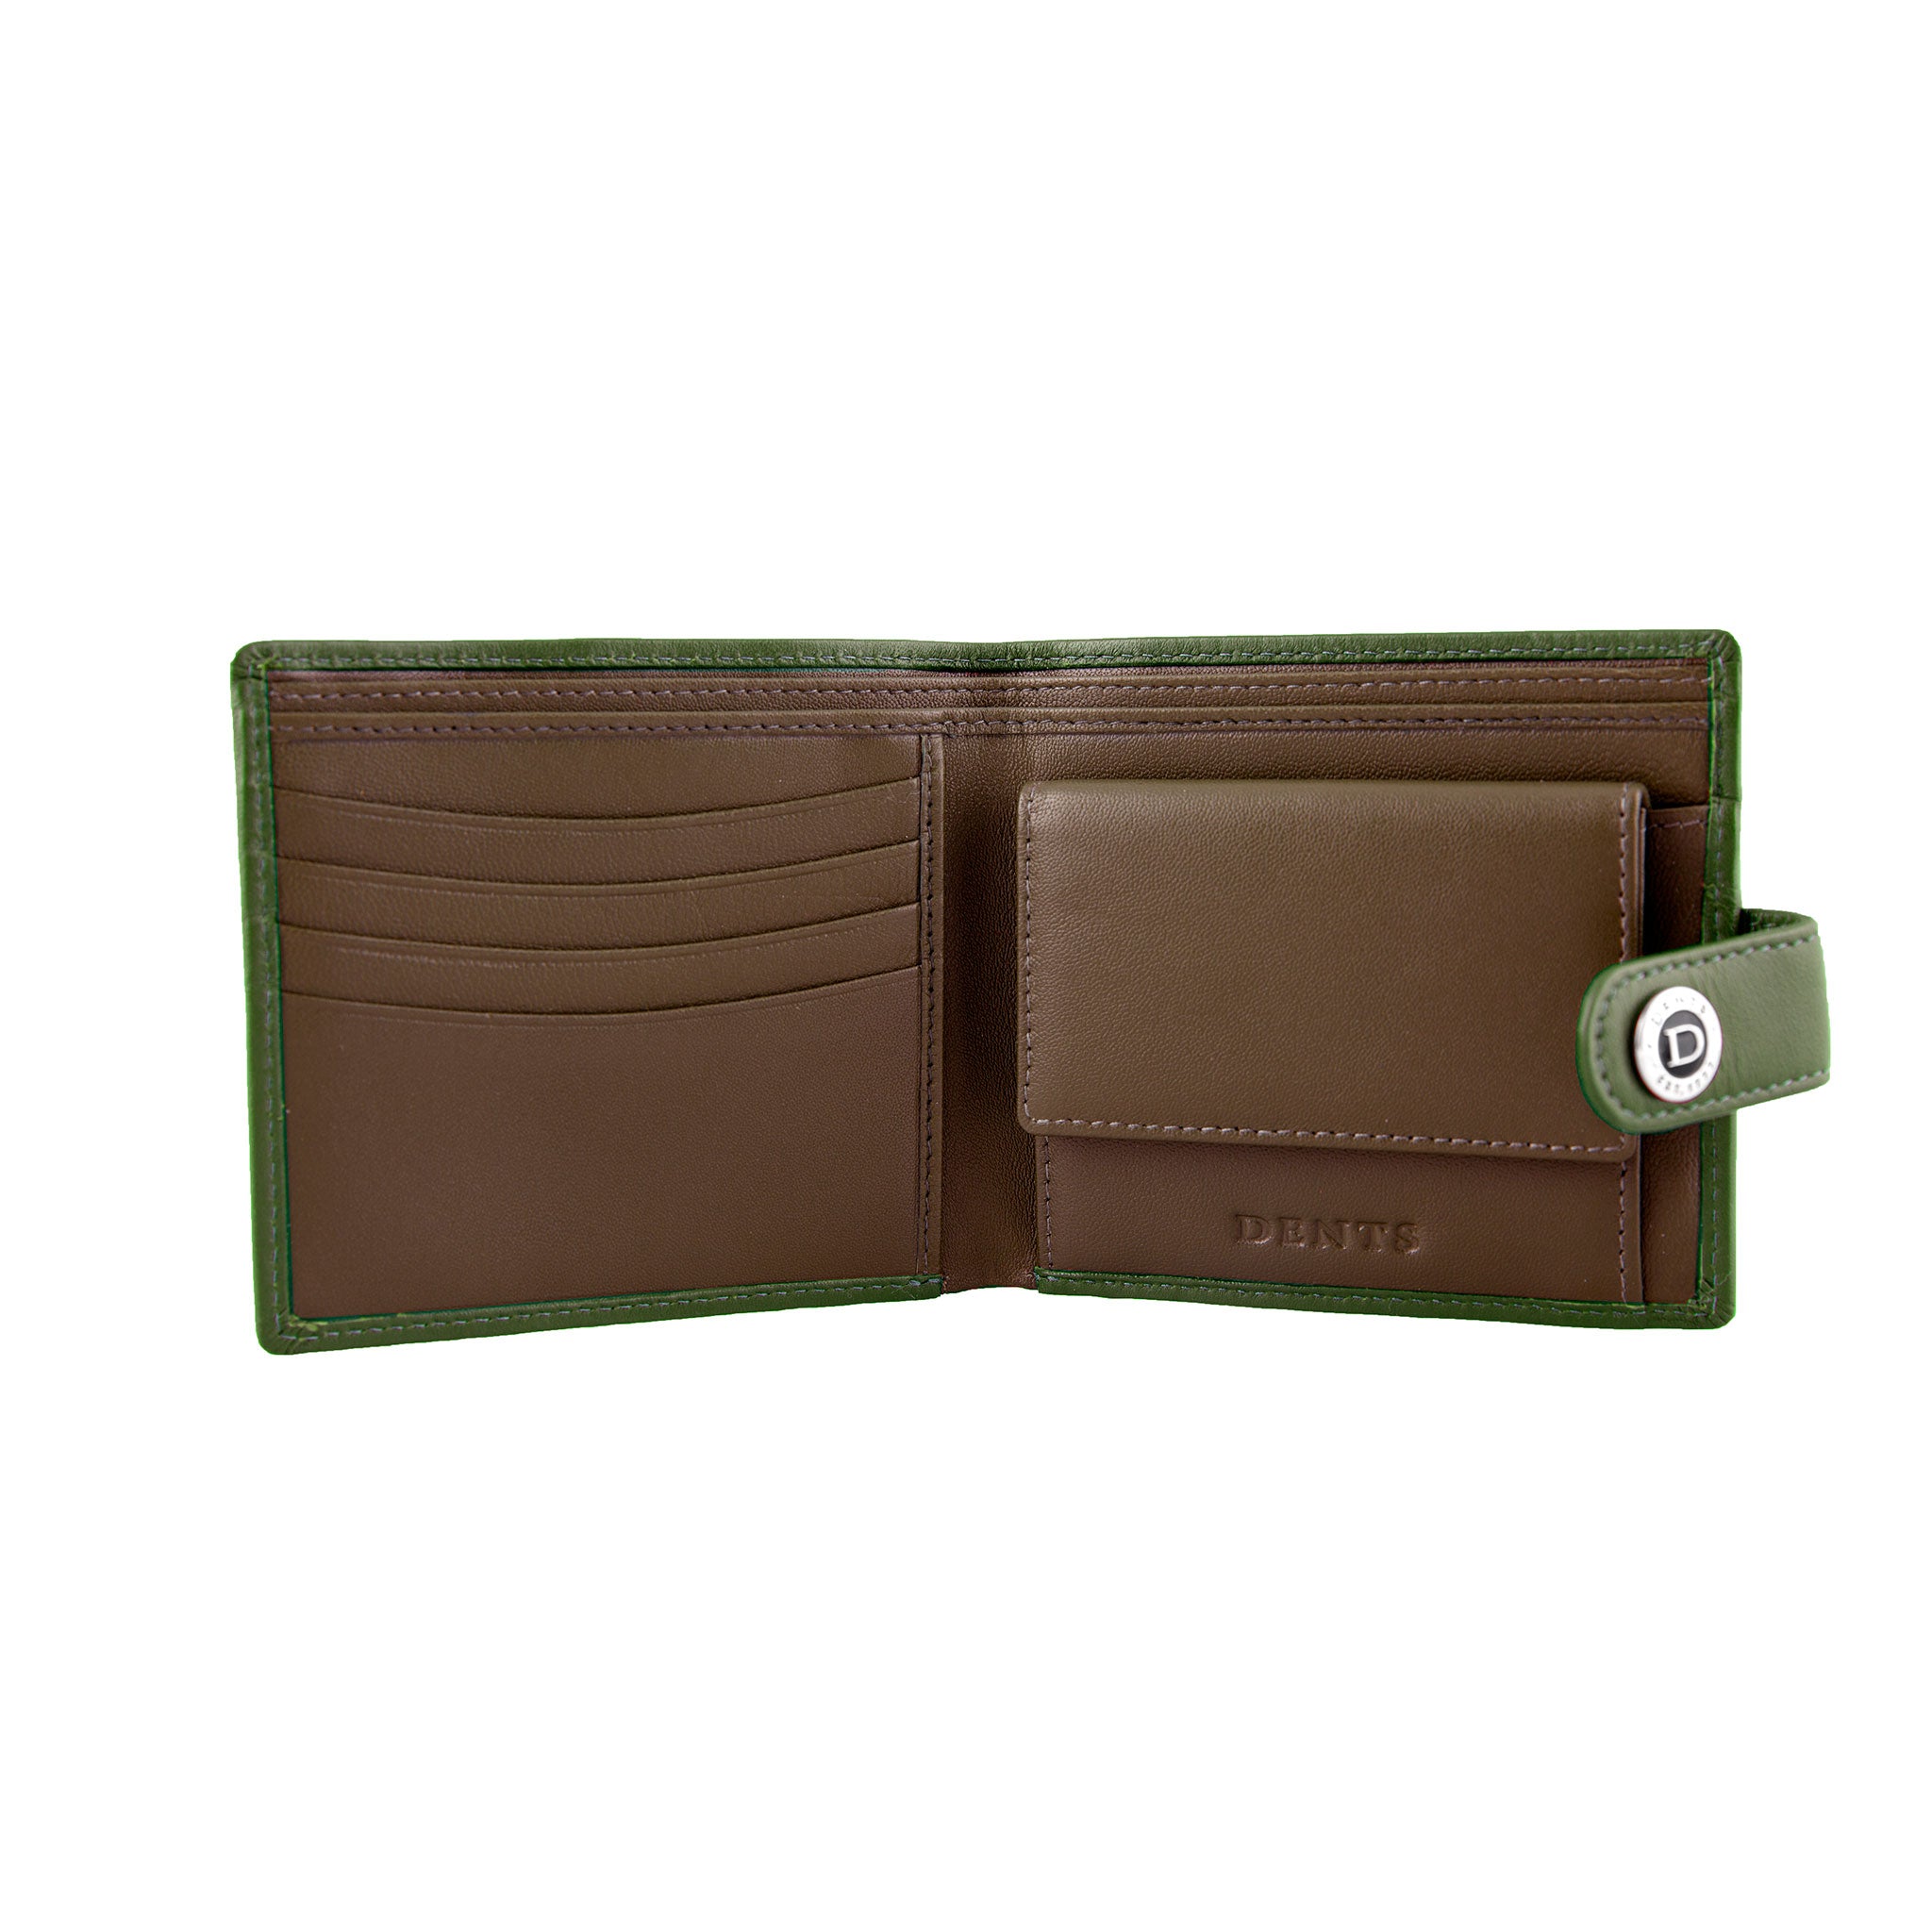 custom genuine leather wallet leather men| Alibaba.com